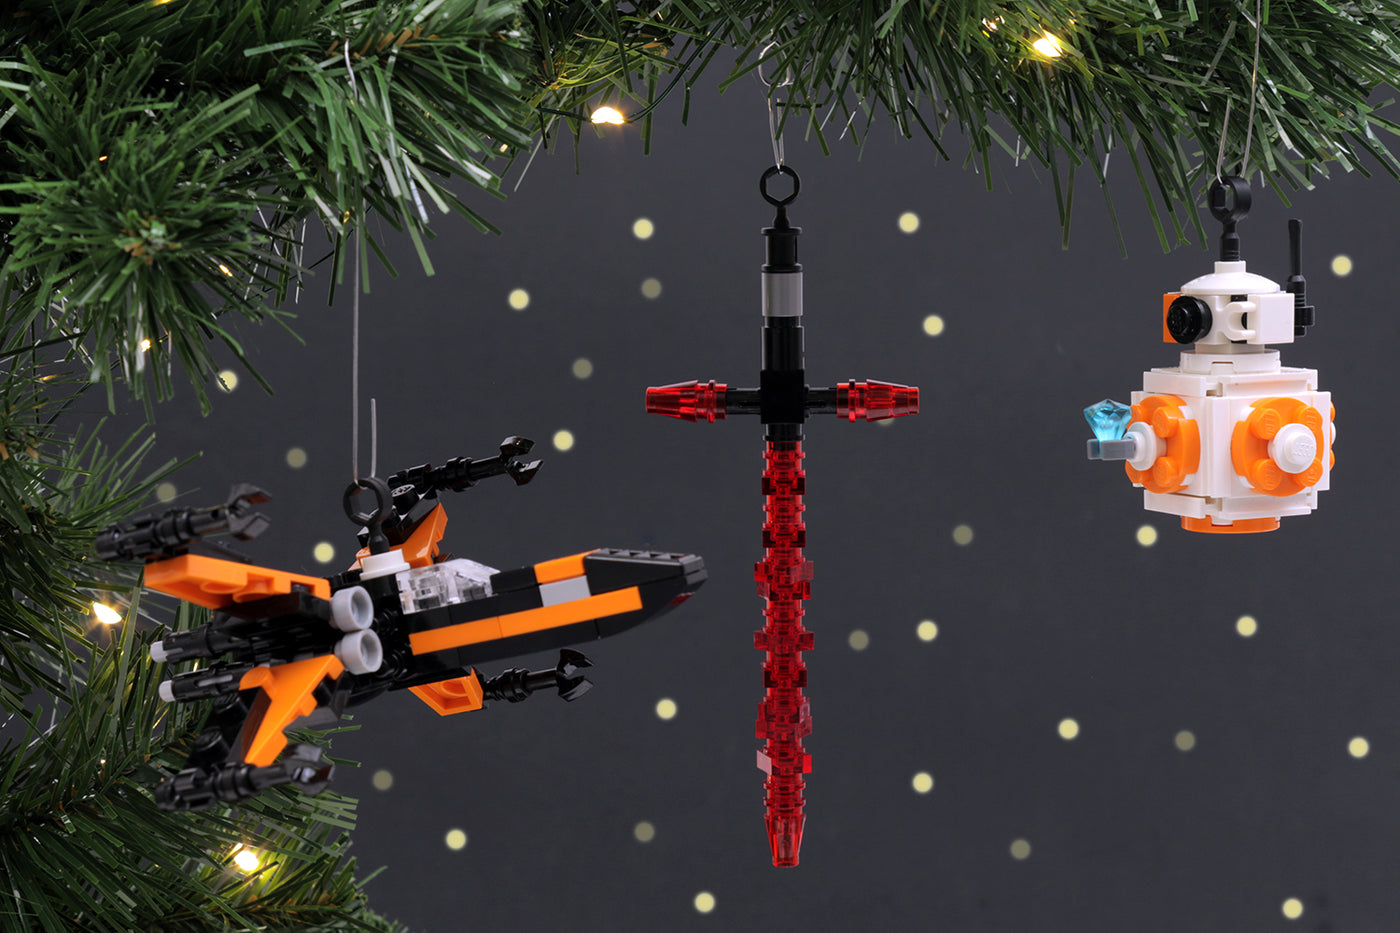 Instructions for Custom LEGO Star Wars Phase 1 Clone Trooper – B3 Customs